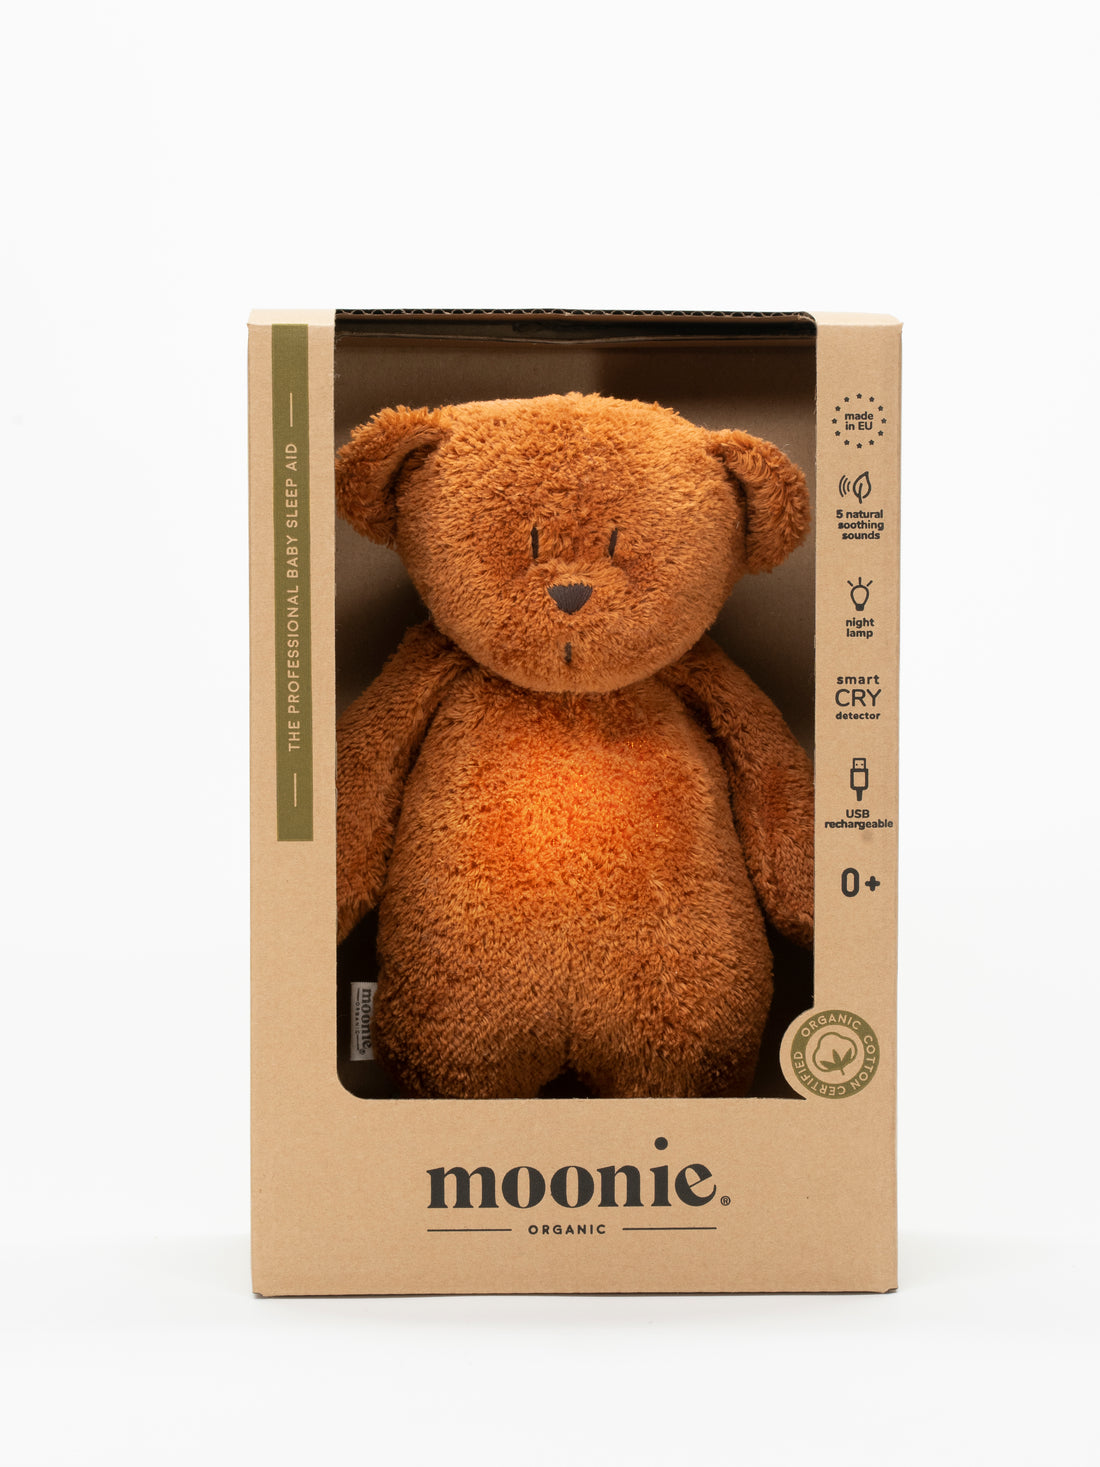 Moonie Organic Humming Bear Light and Sleep Aid, Caramel